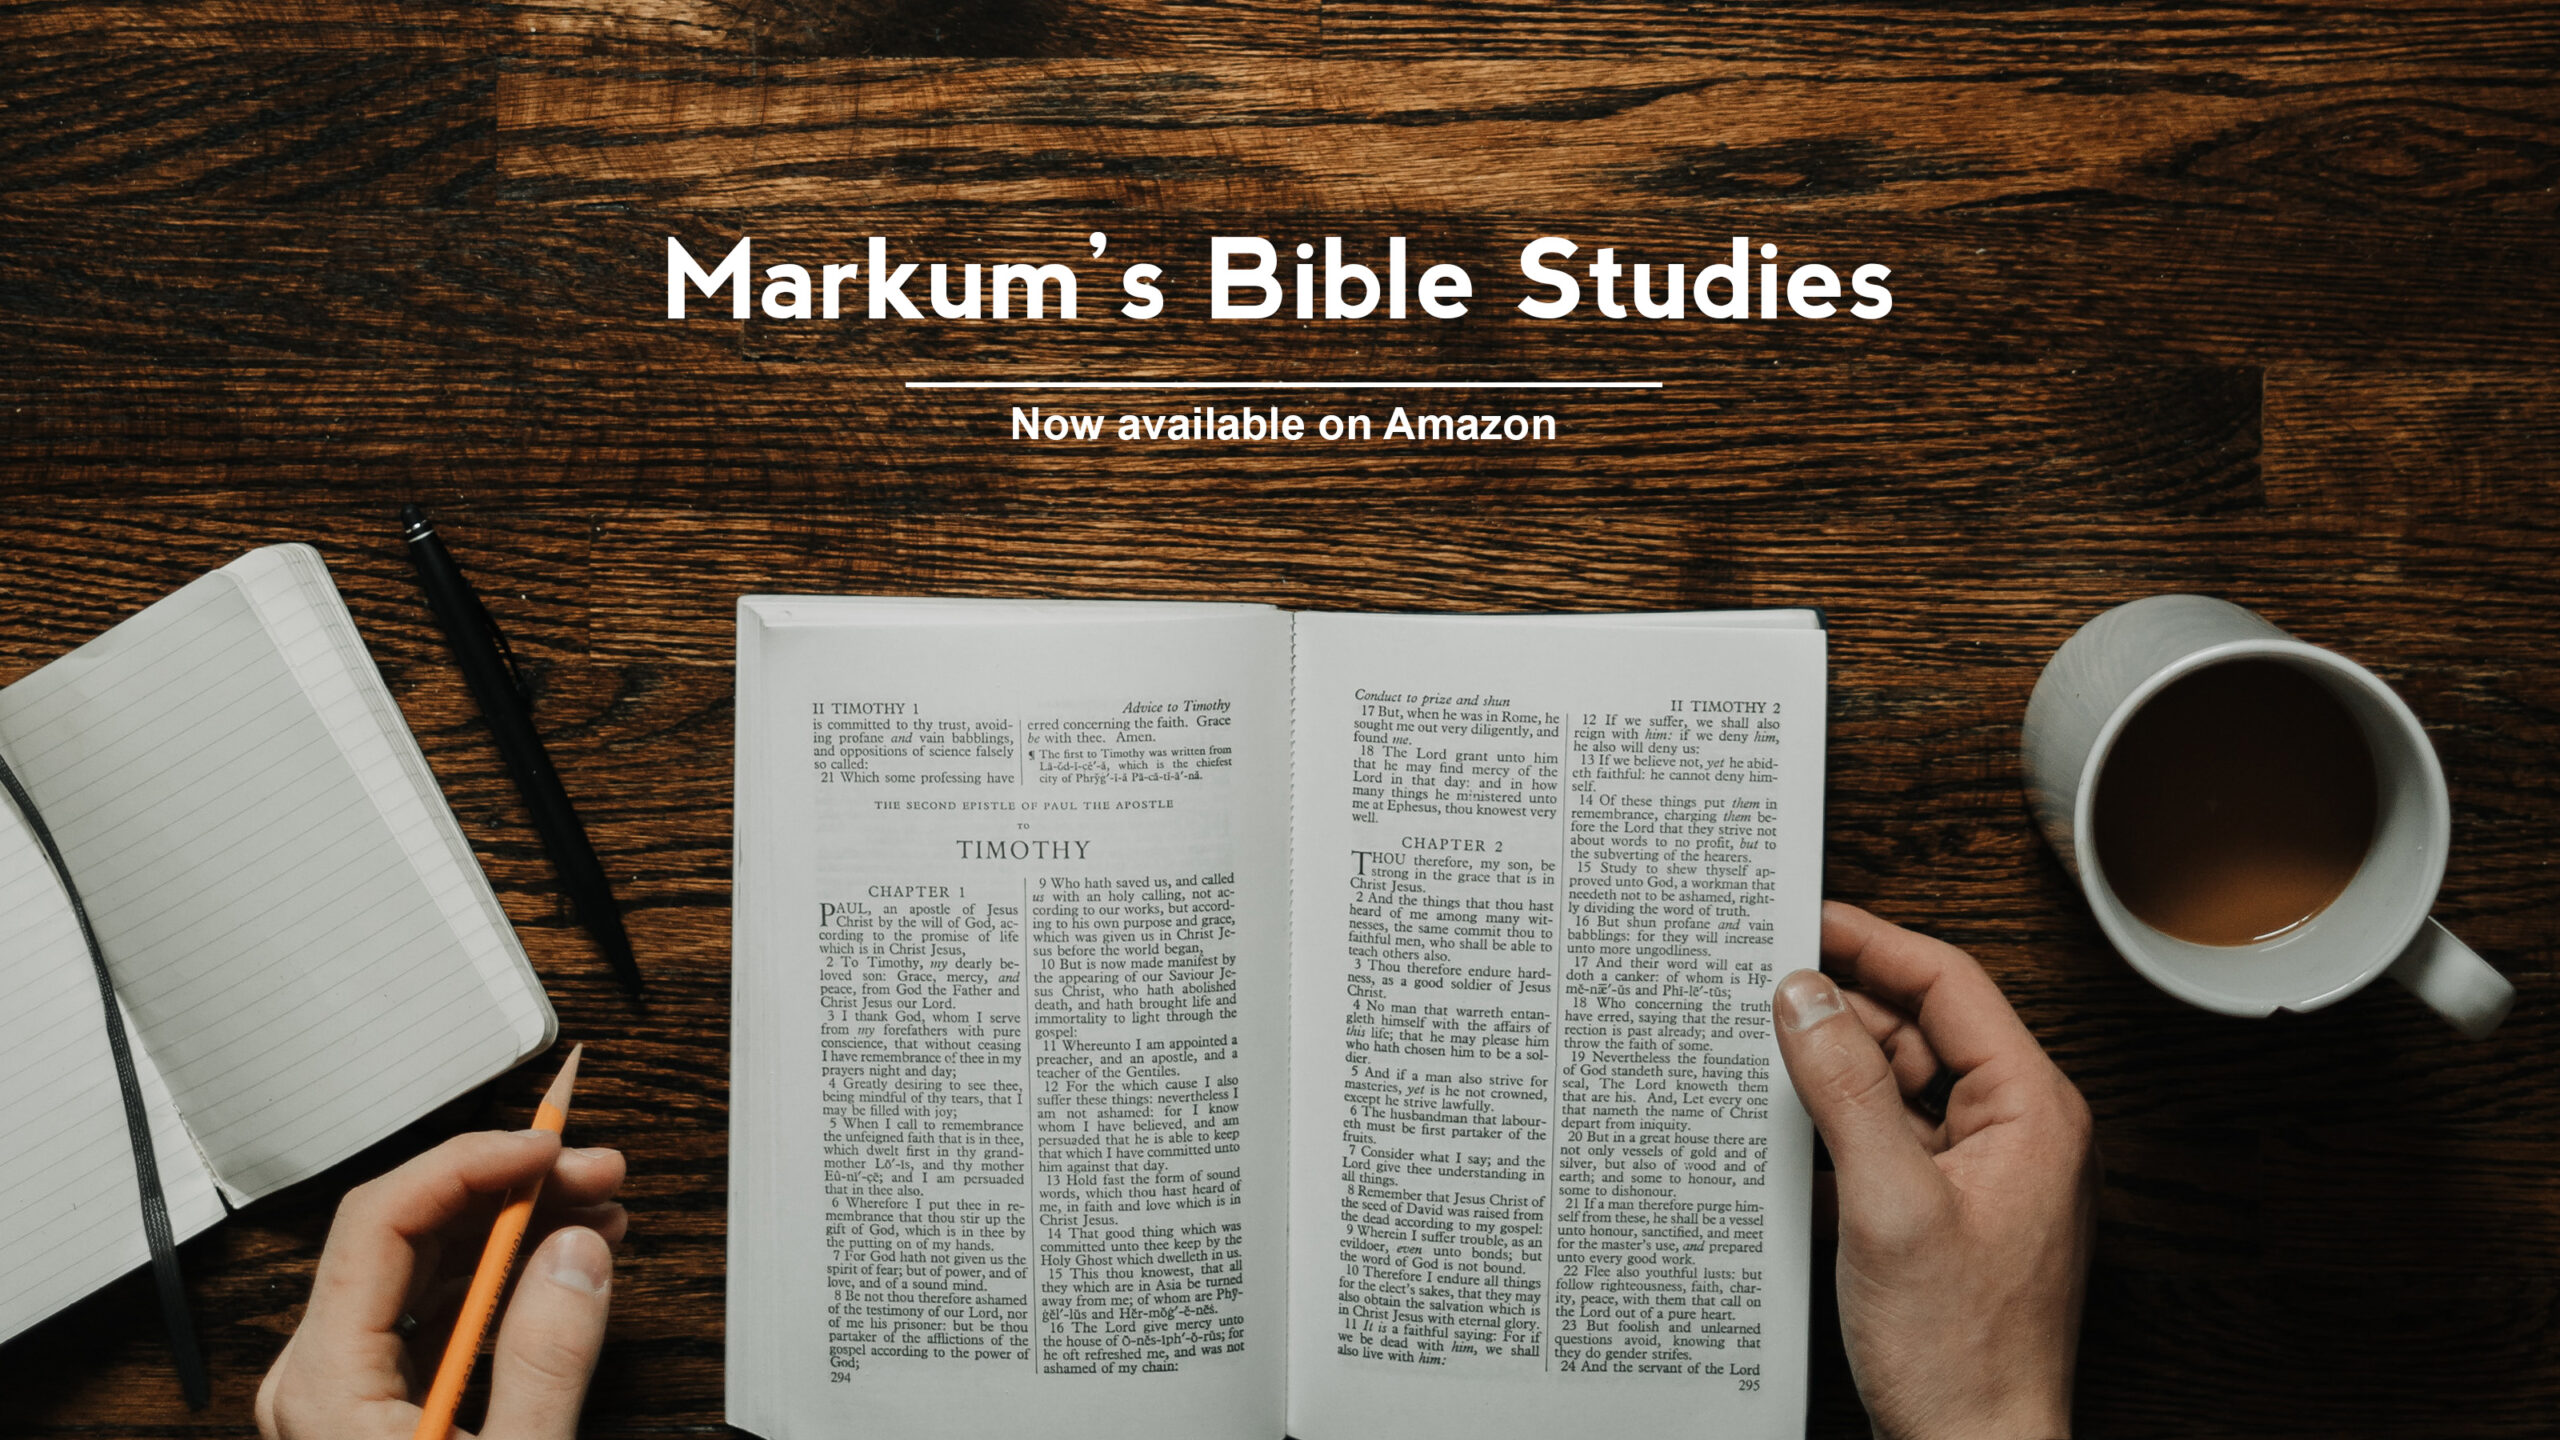 Markum’s Bible Studies